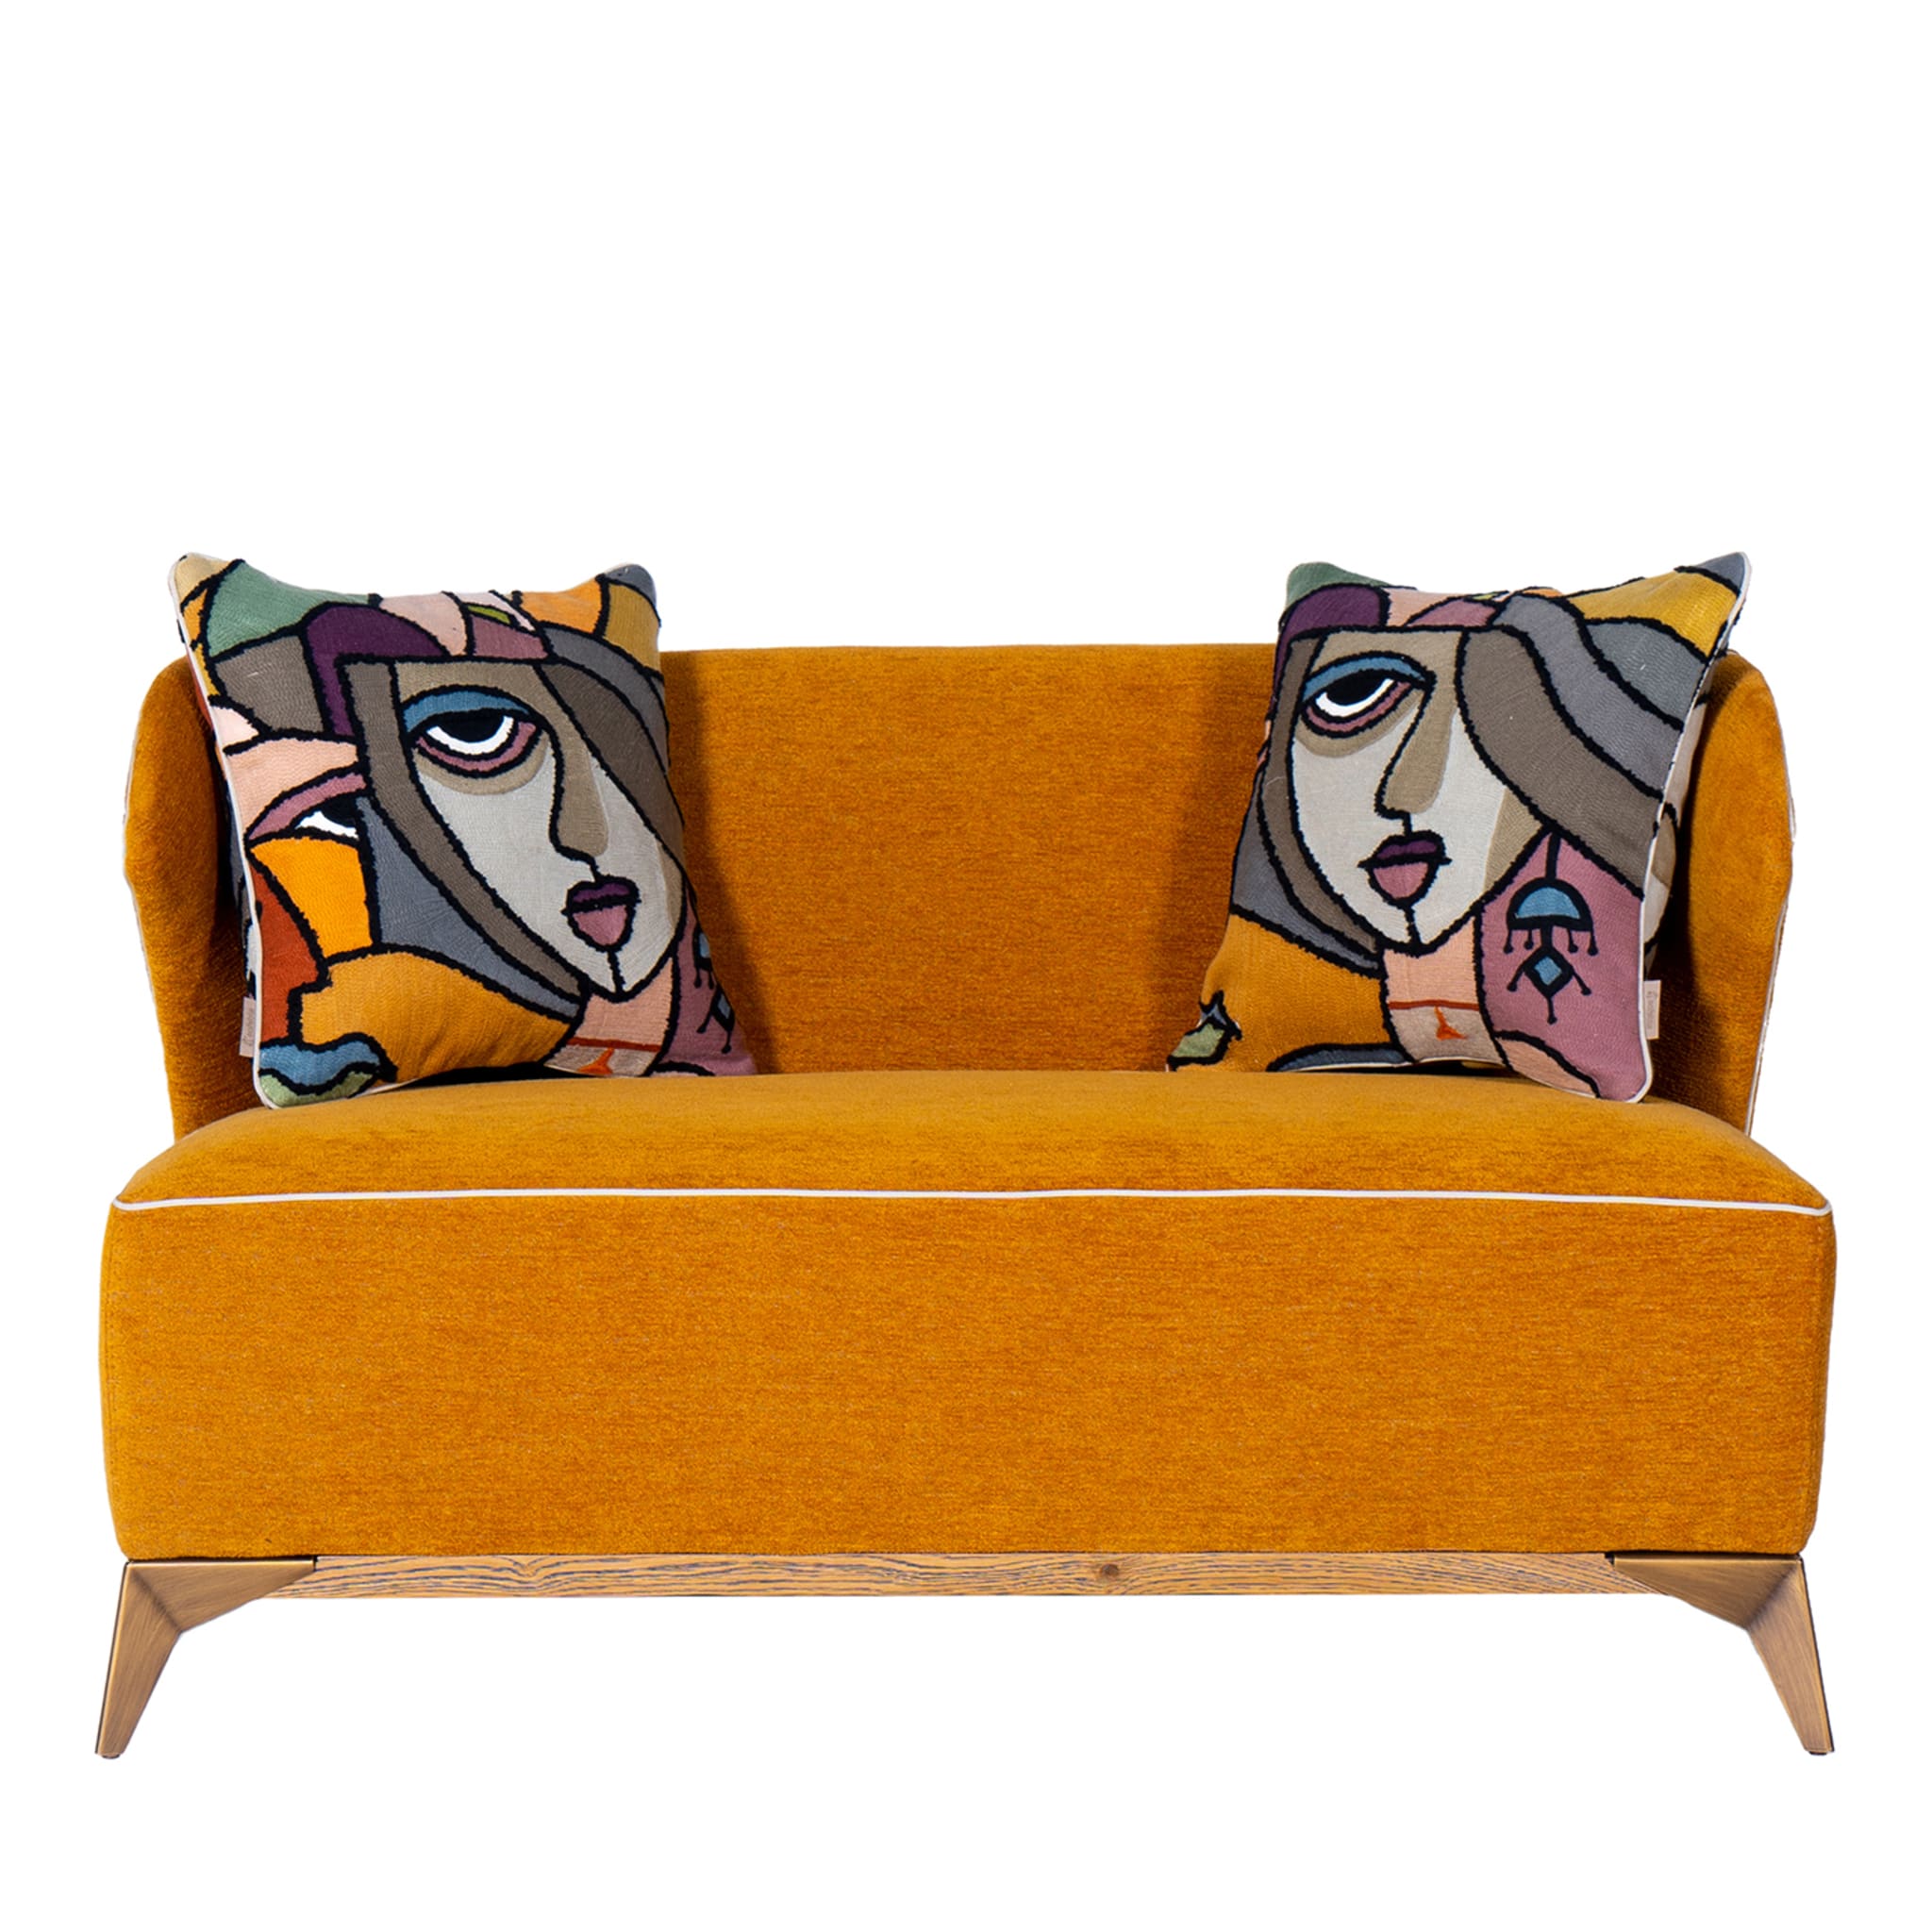 Agostina sofa by Marco & Giulio Mantellassi - Main view